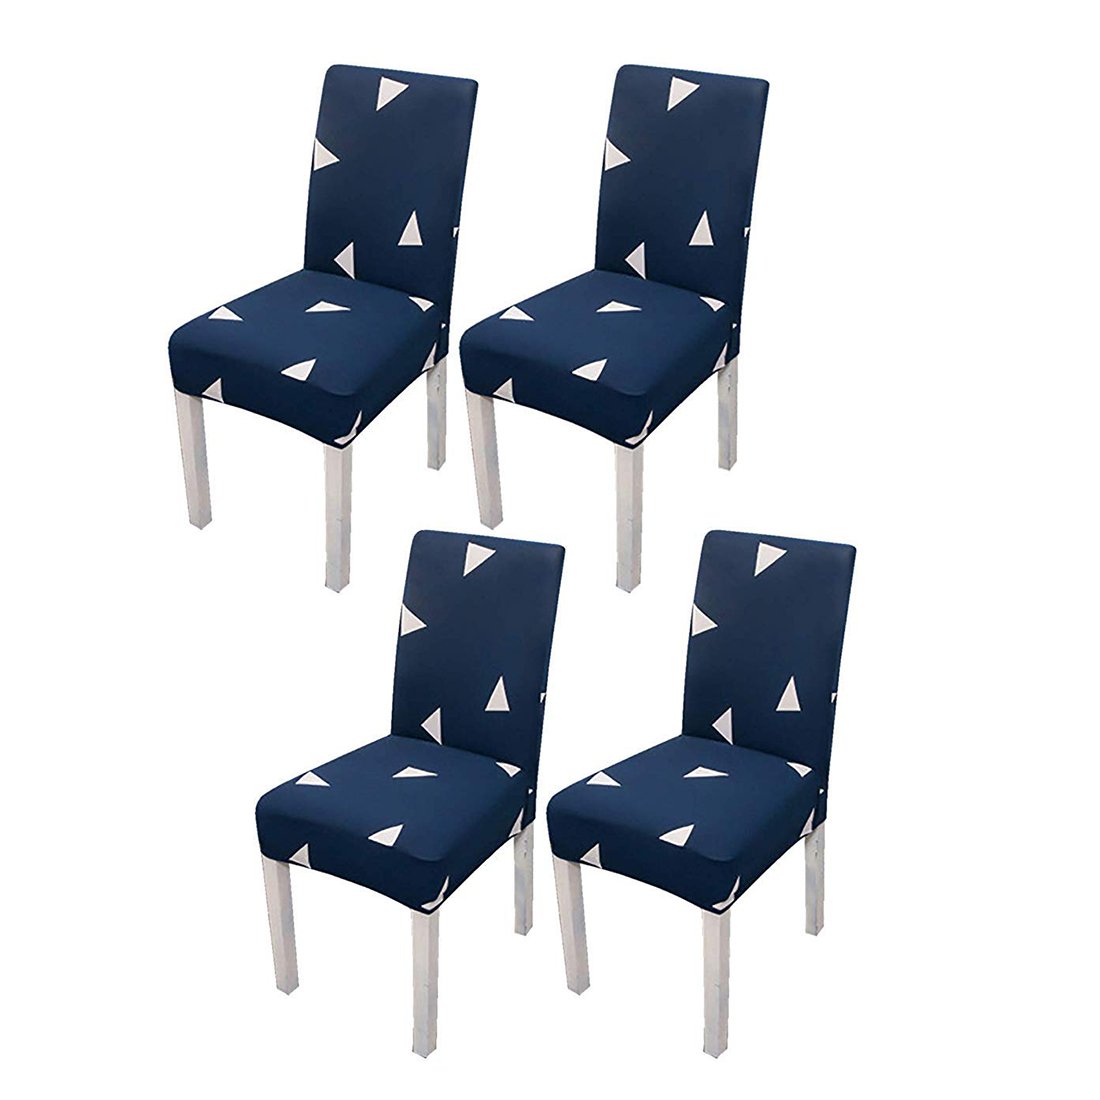 Printed Elastic Chair Cover - Dark Blue Triangle